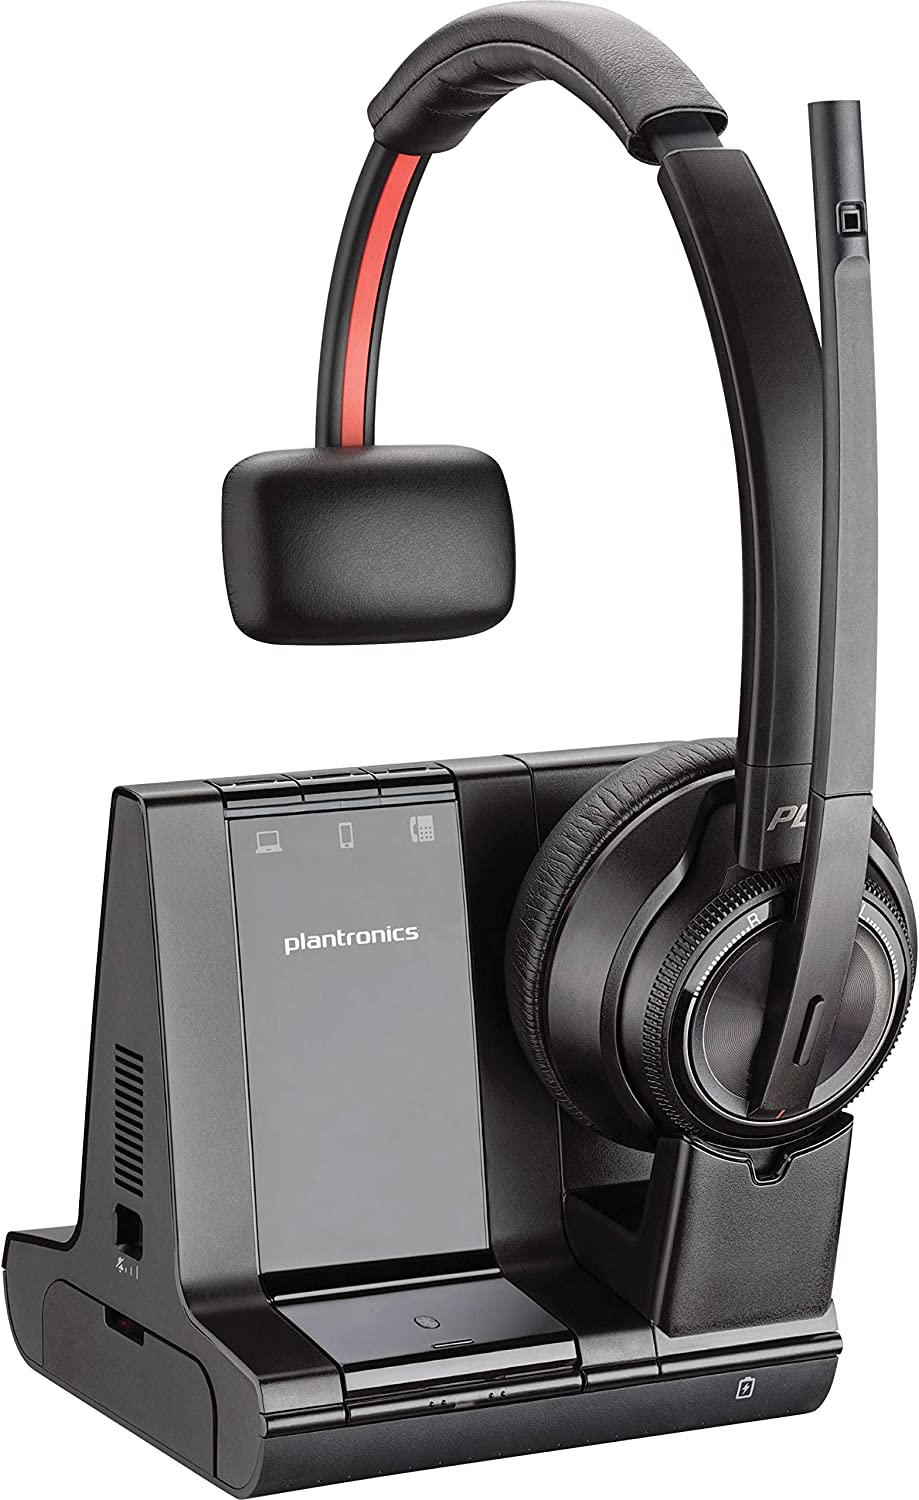 Plantronics Savi 8200 Series Wireless Dect Headset System, Black Black 1